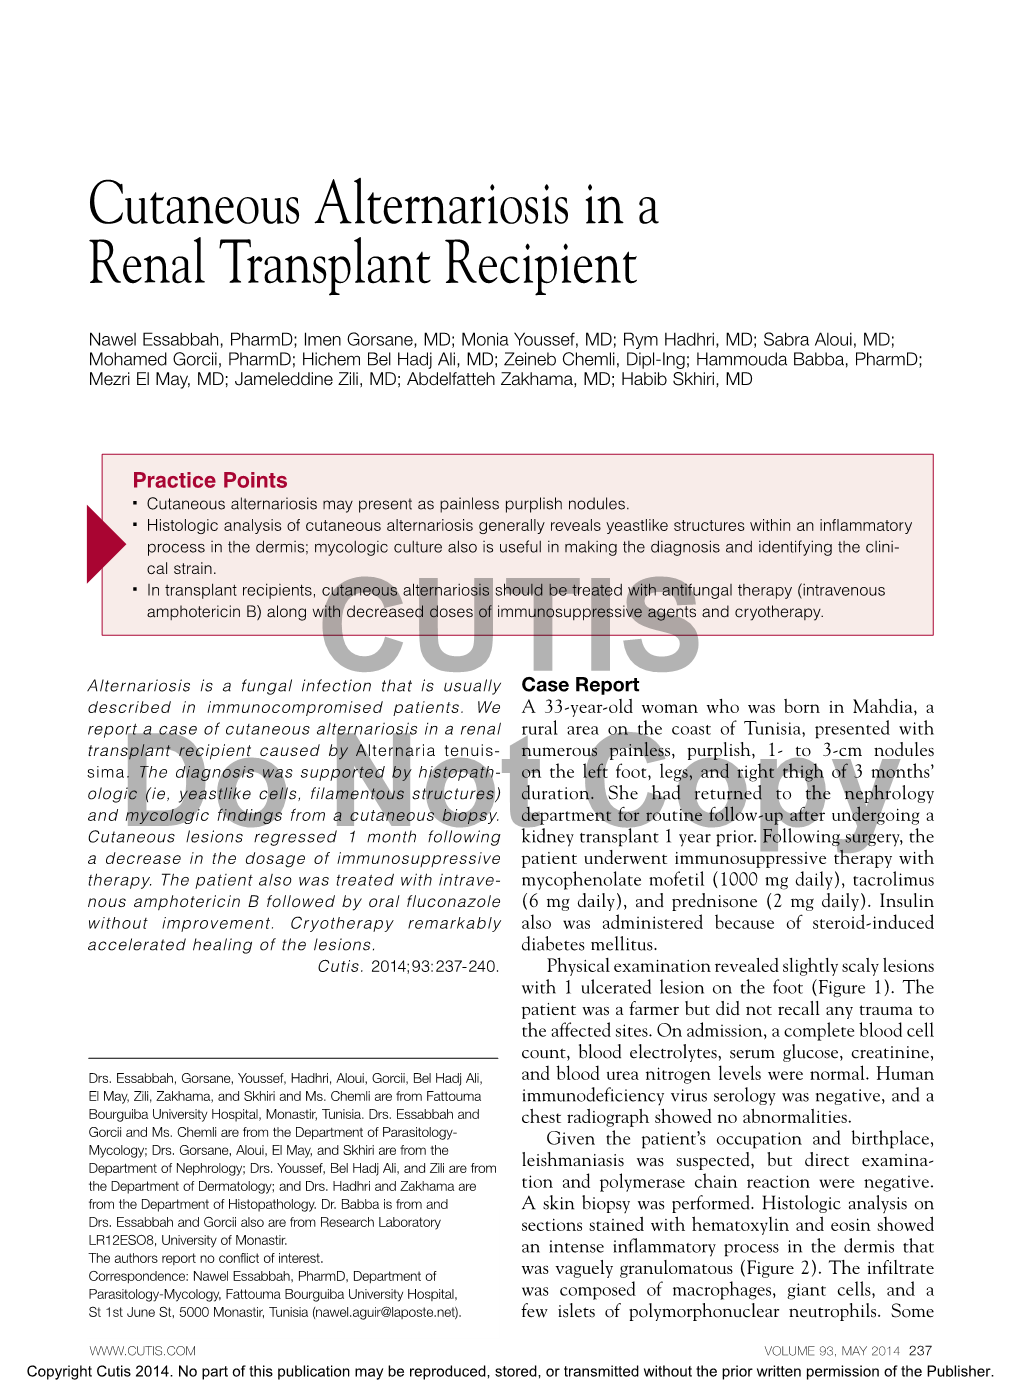 Cutaneous Alternariosis in a Renal Transplant Recipient